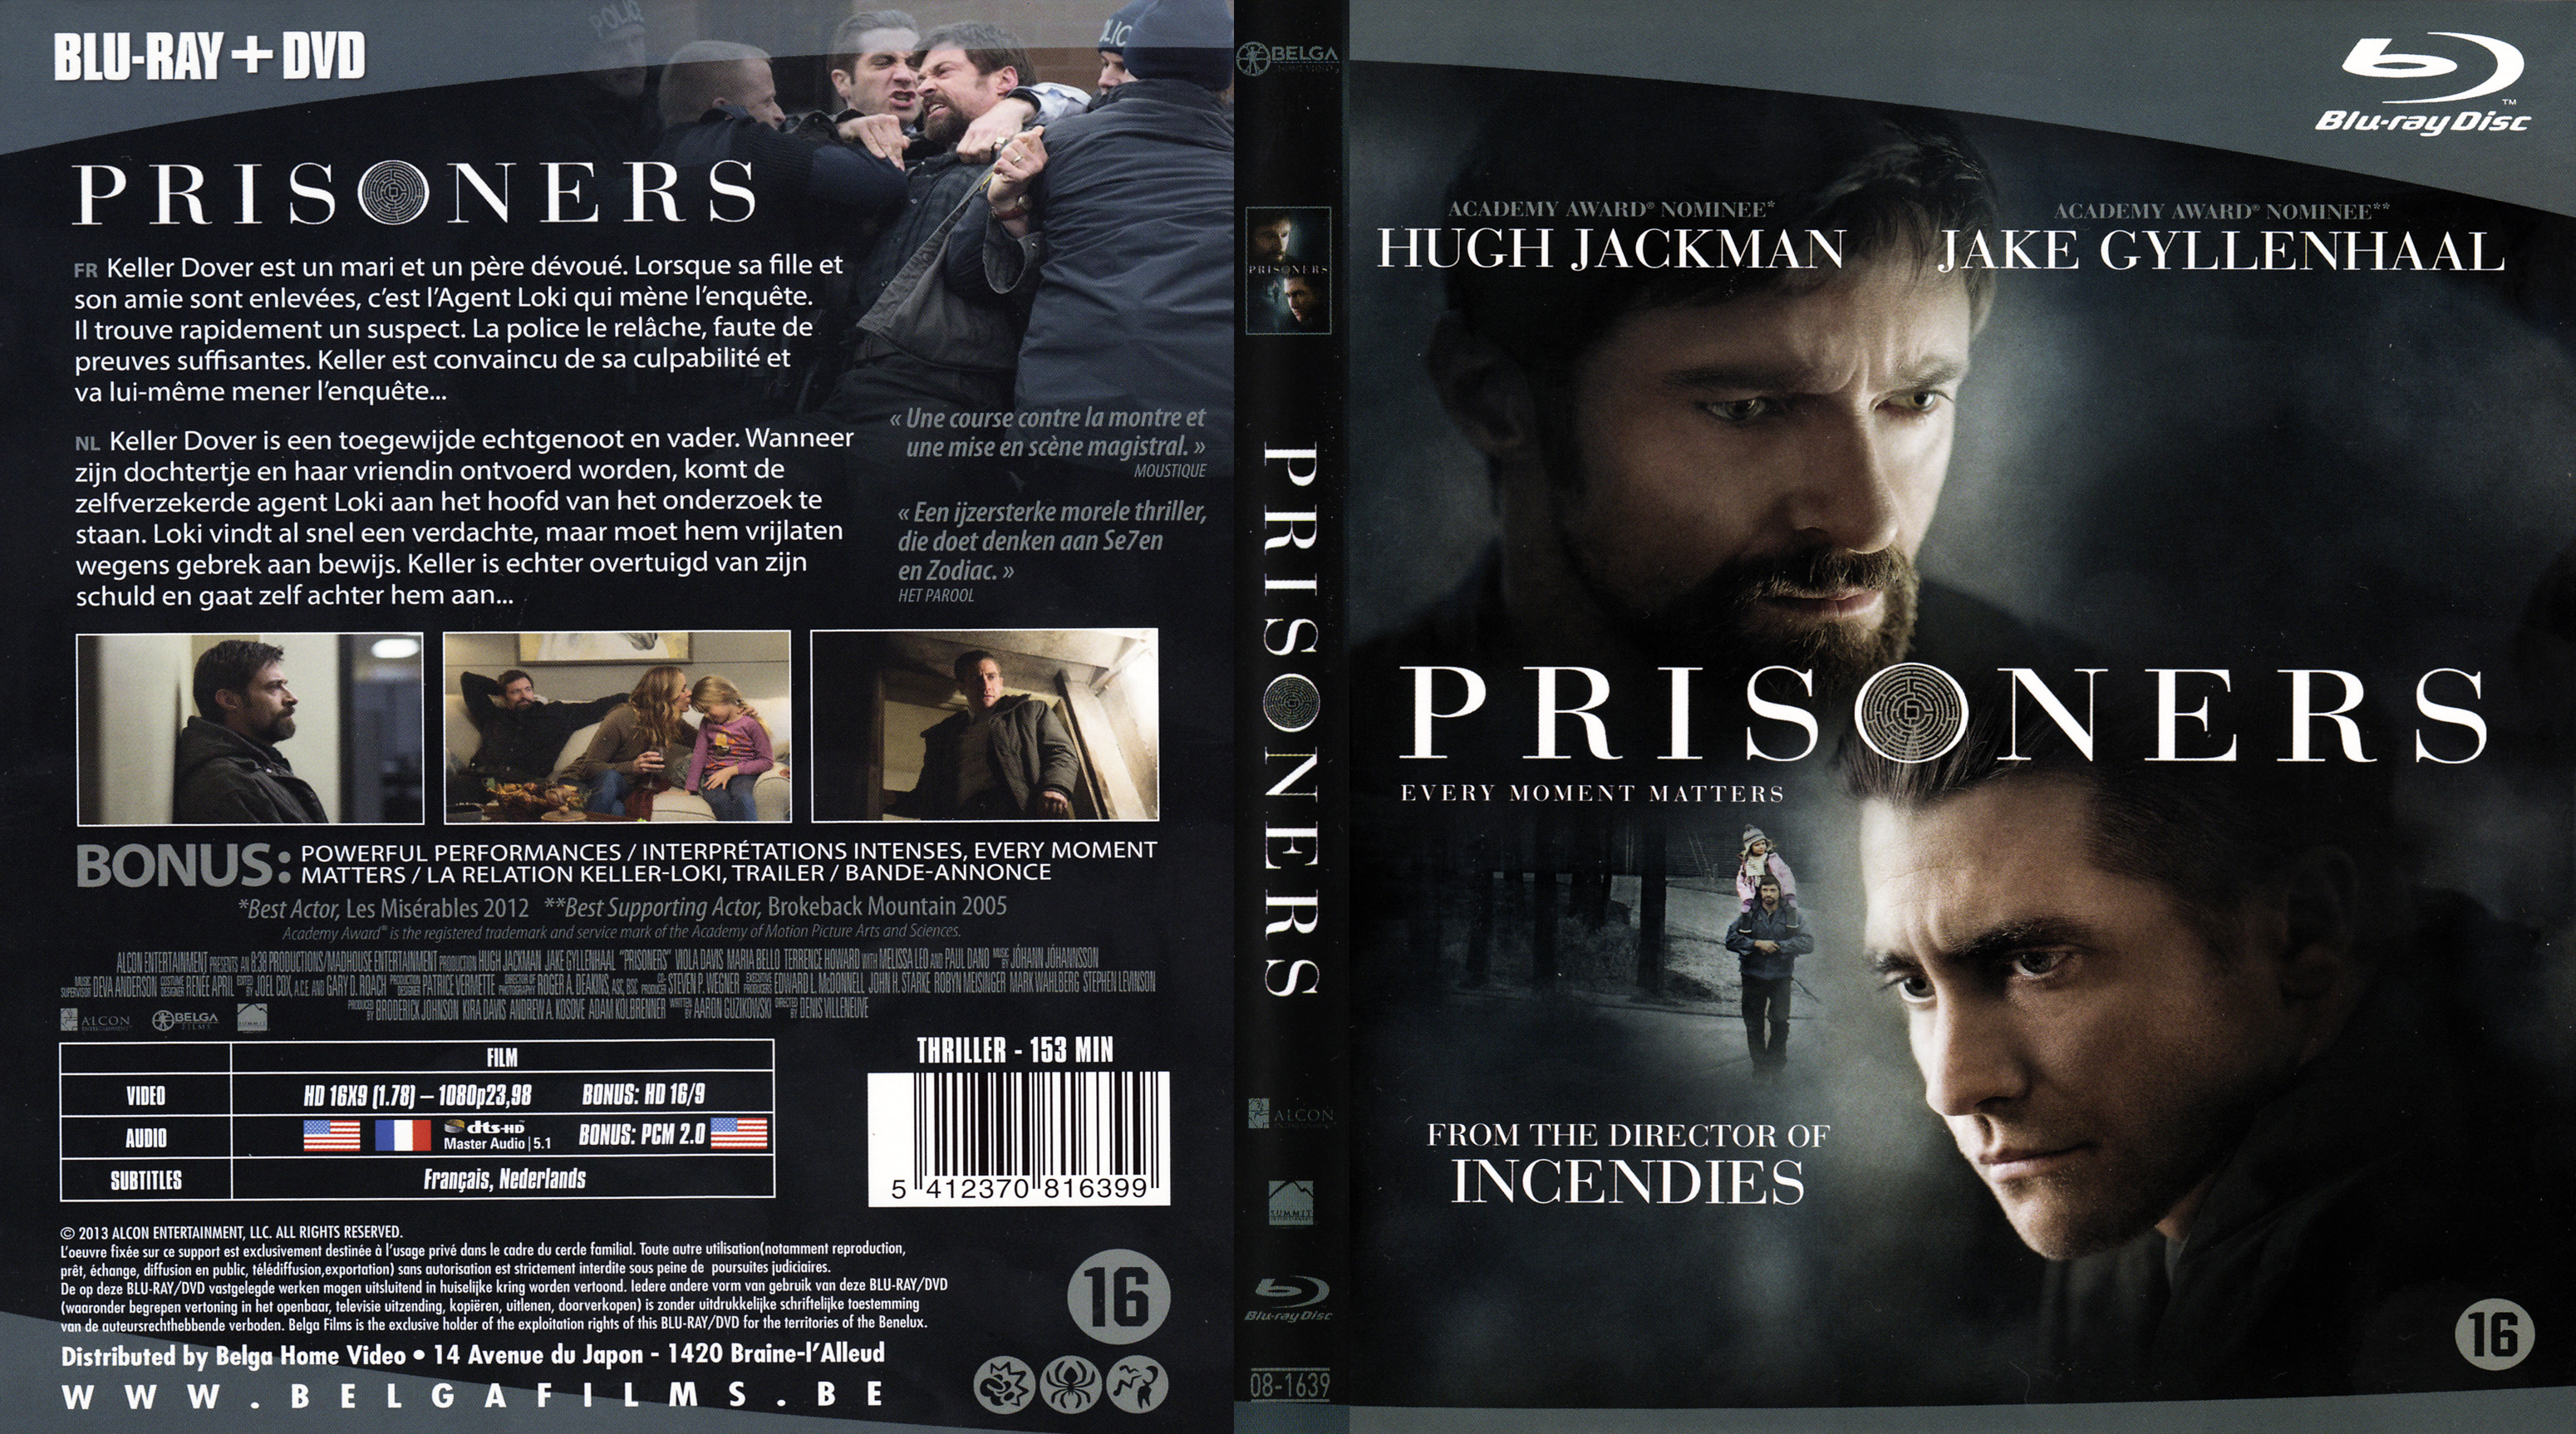 Jaquette DVD Prisoners (BLU-RAY) v2